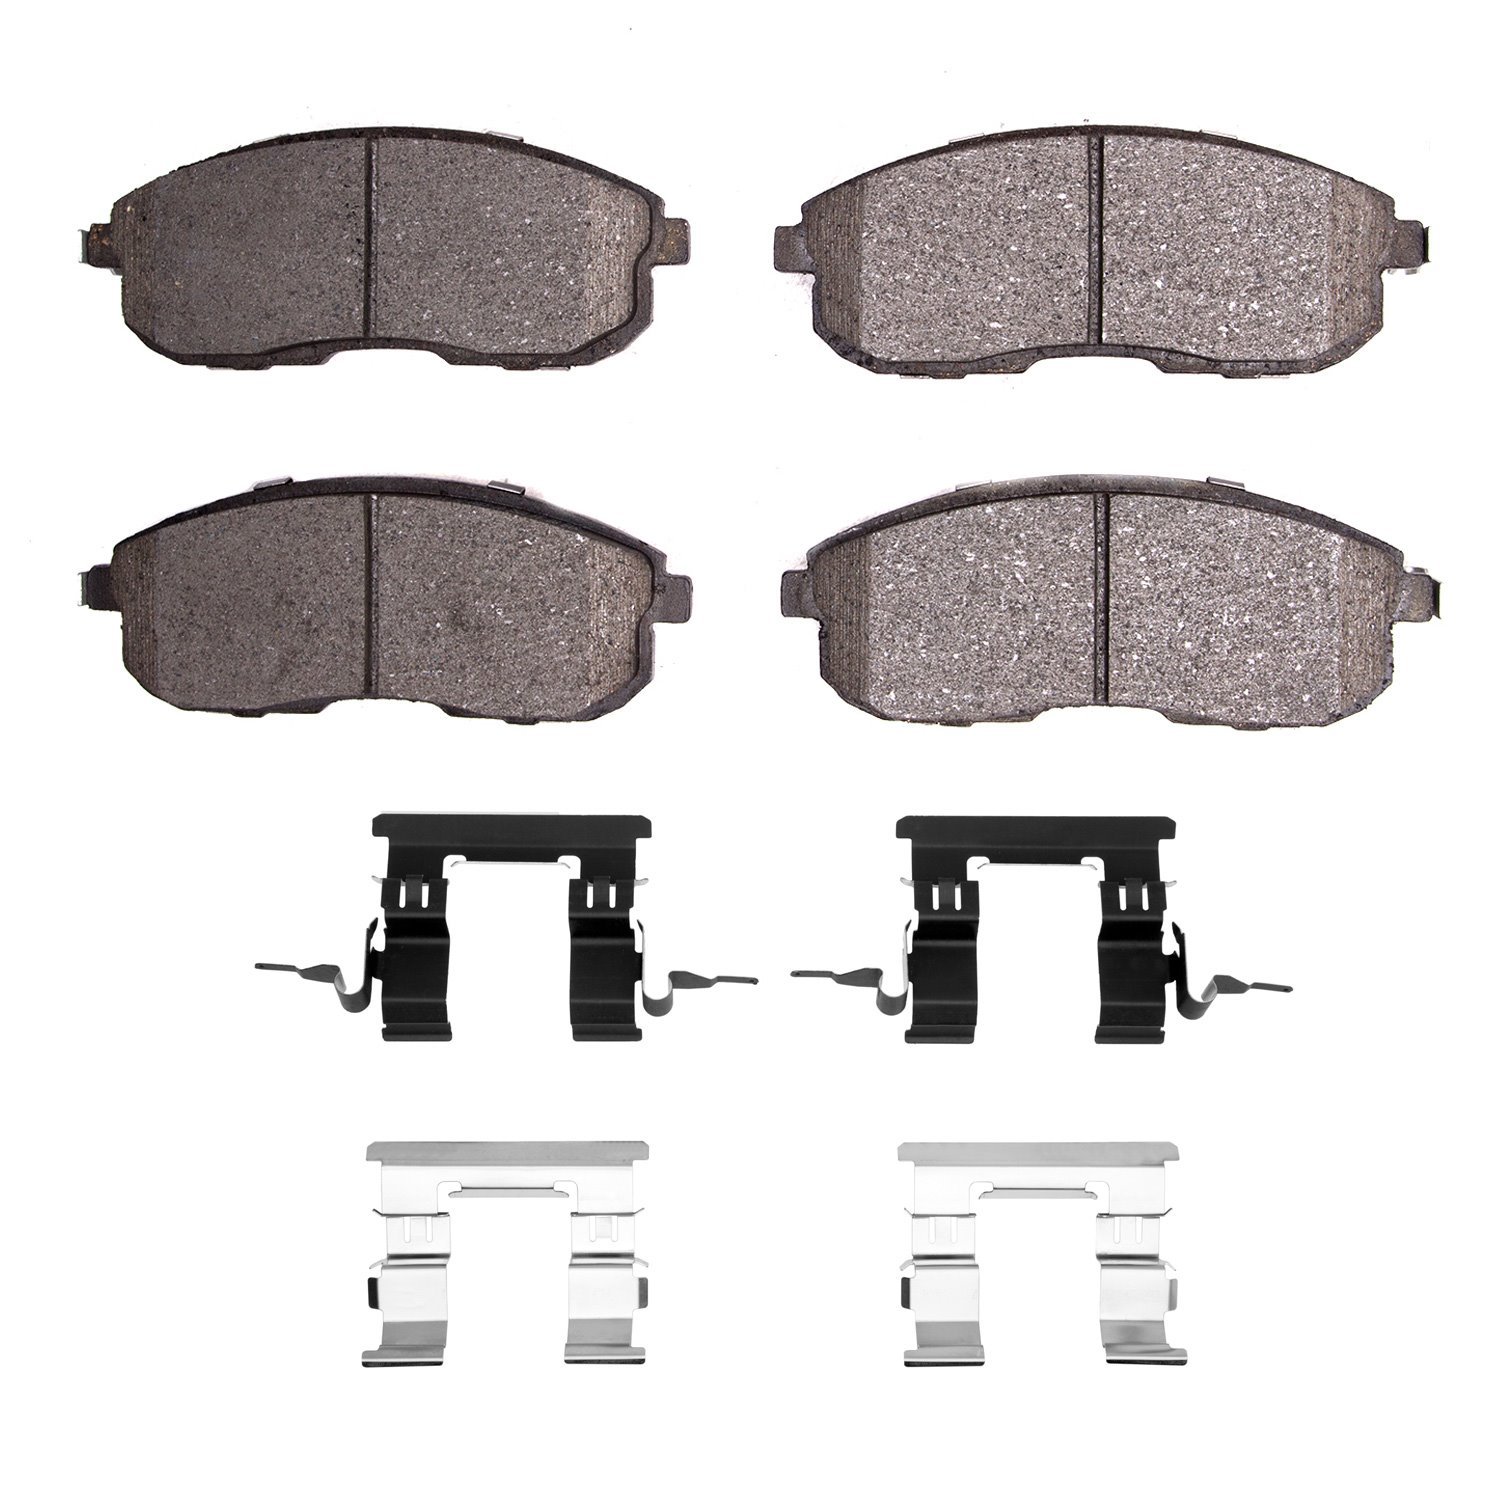 1310-0815-11 3000-Series Ceramic Brake Pads & Hardware Kit, 2002-2019 Multiple Makes/Models, Position: Front